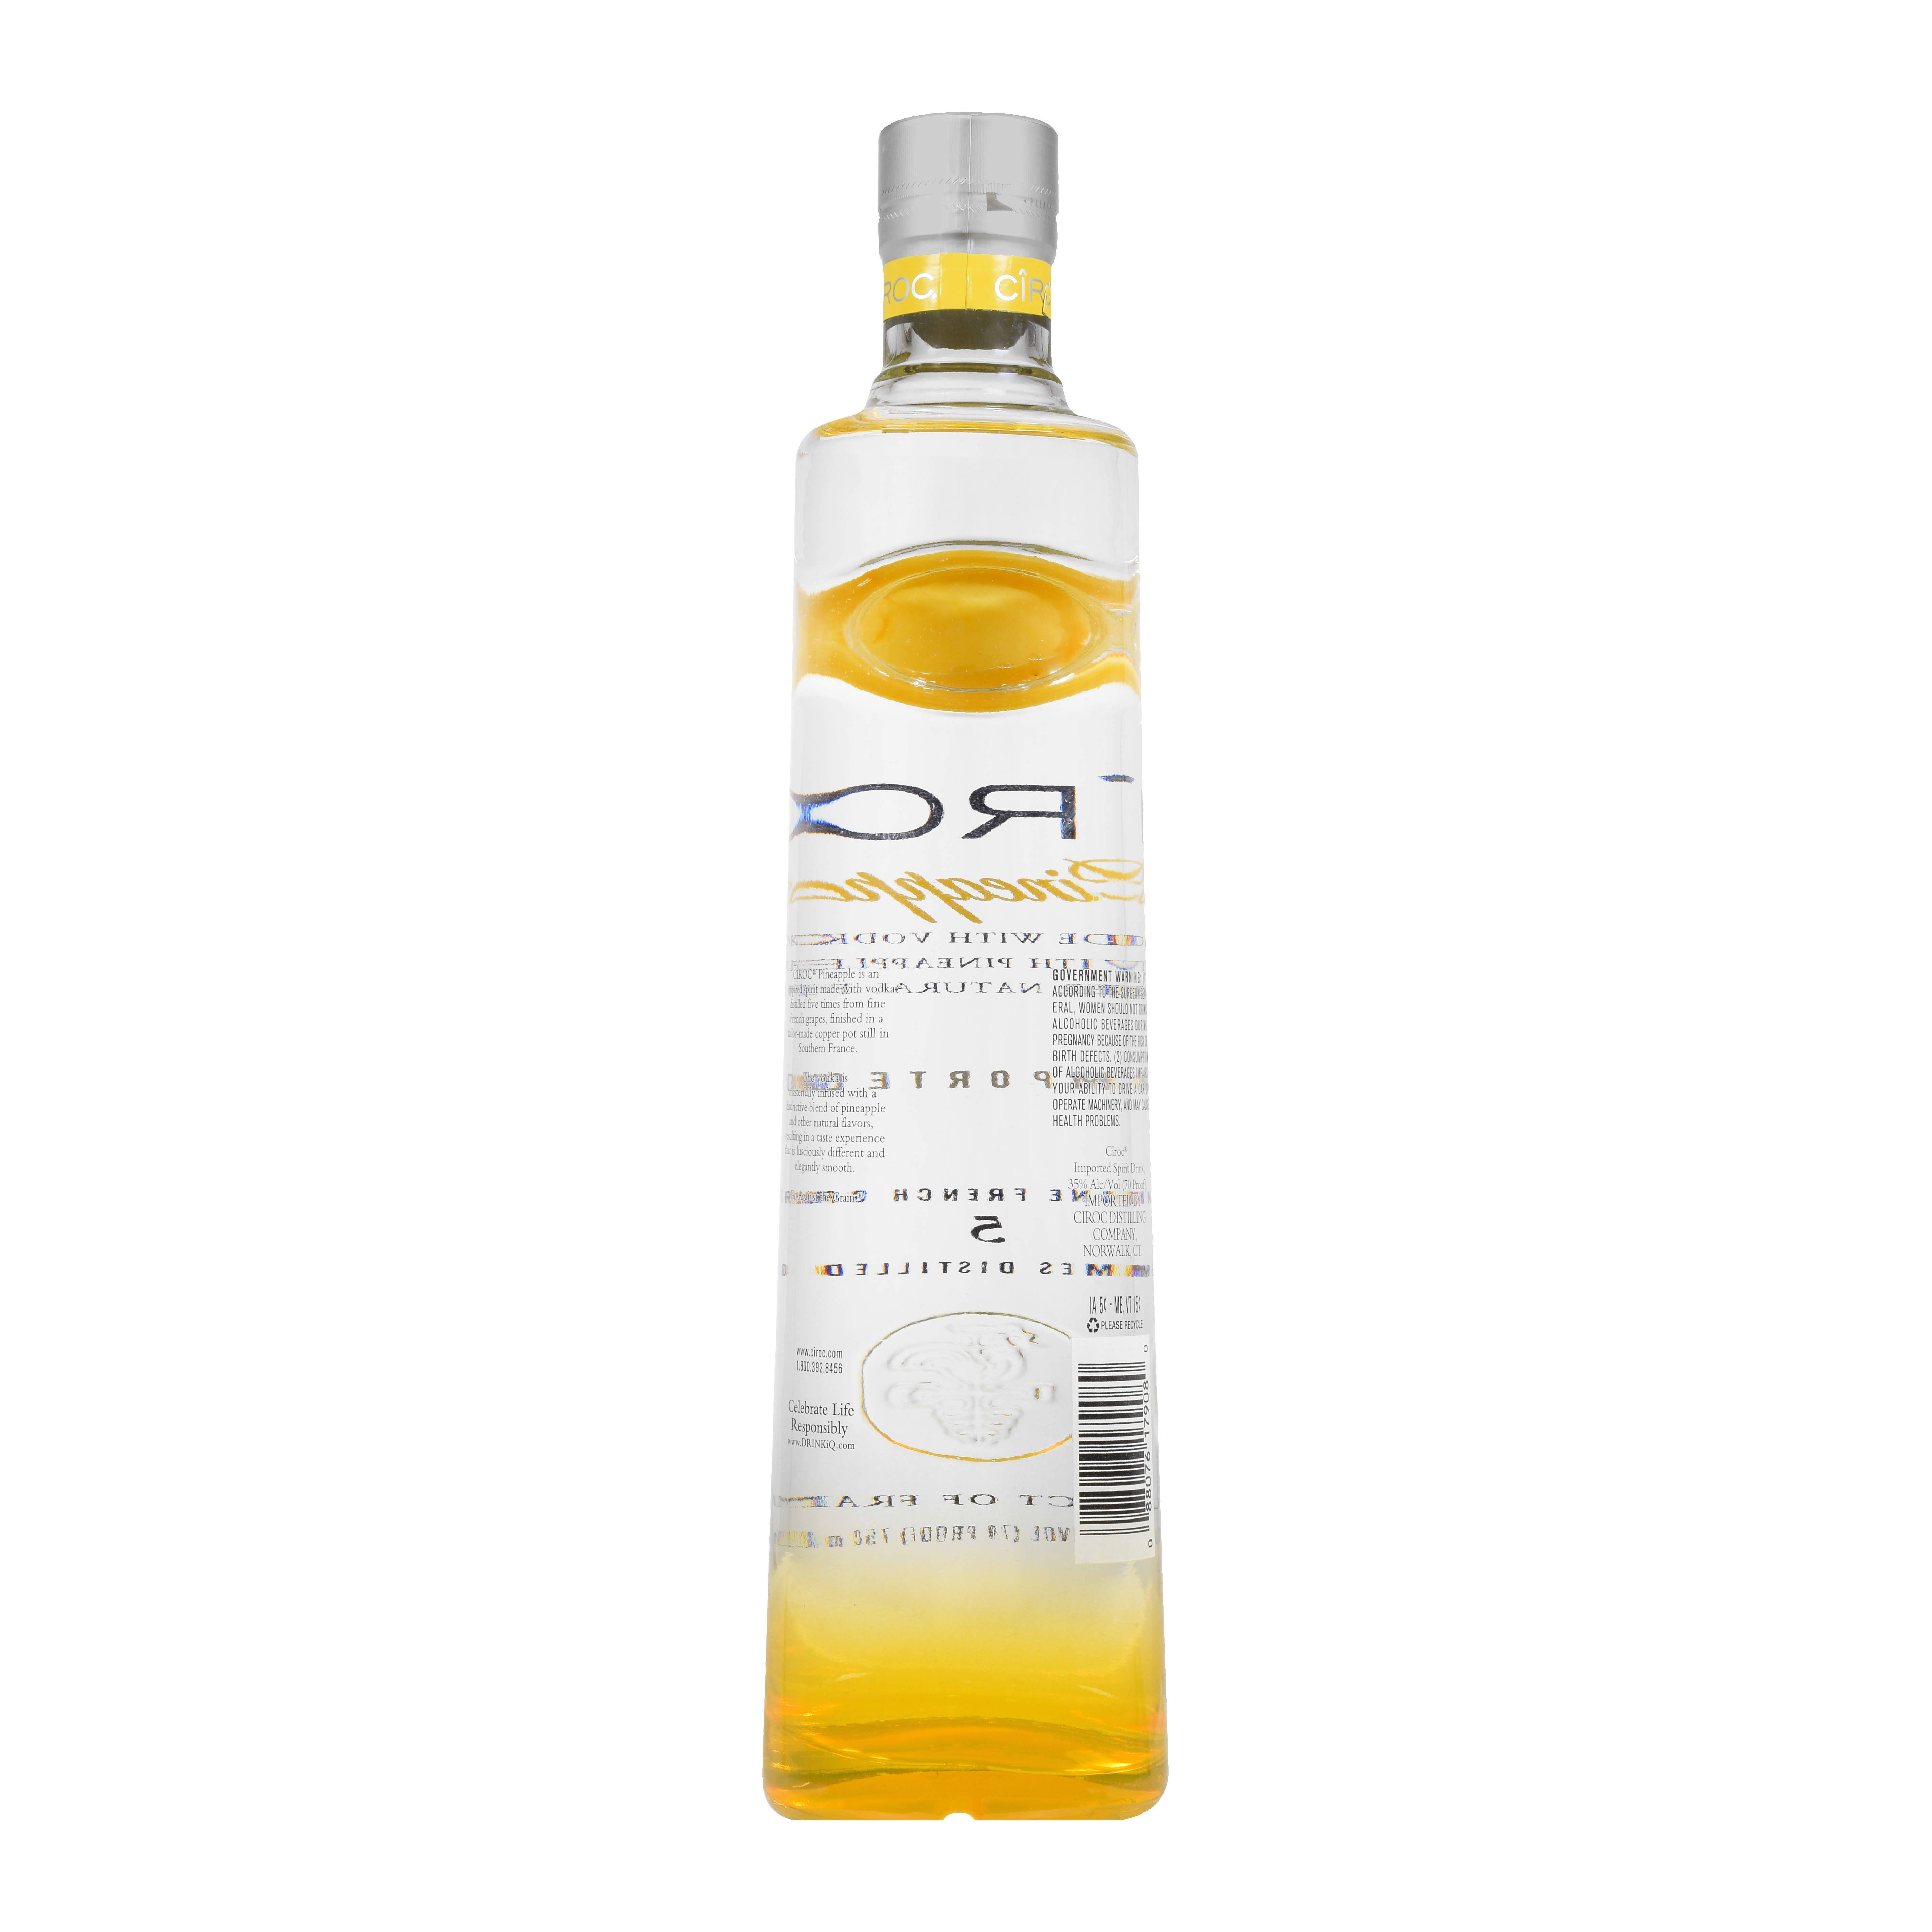 Ciroc Vodka - Pineapple, 750ml